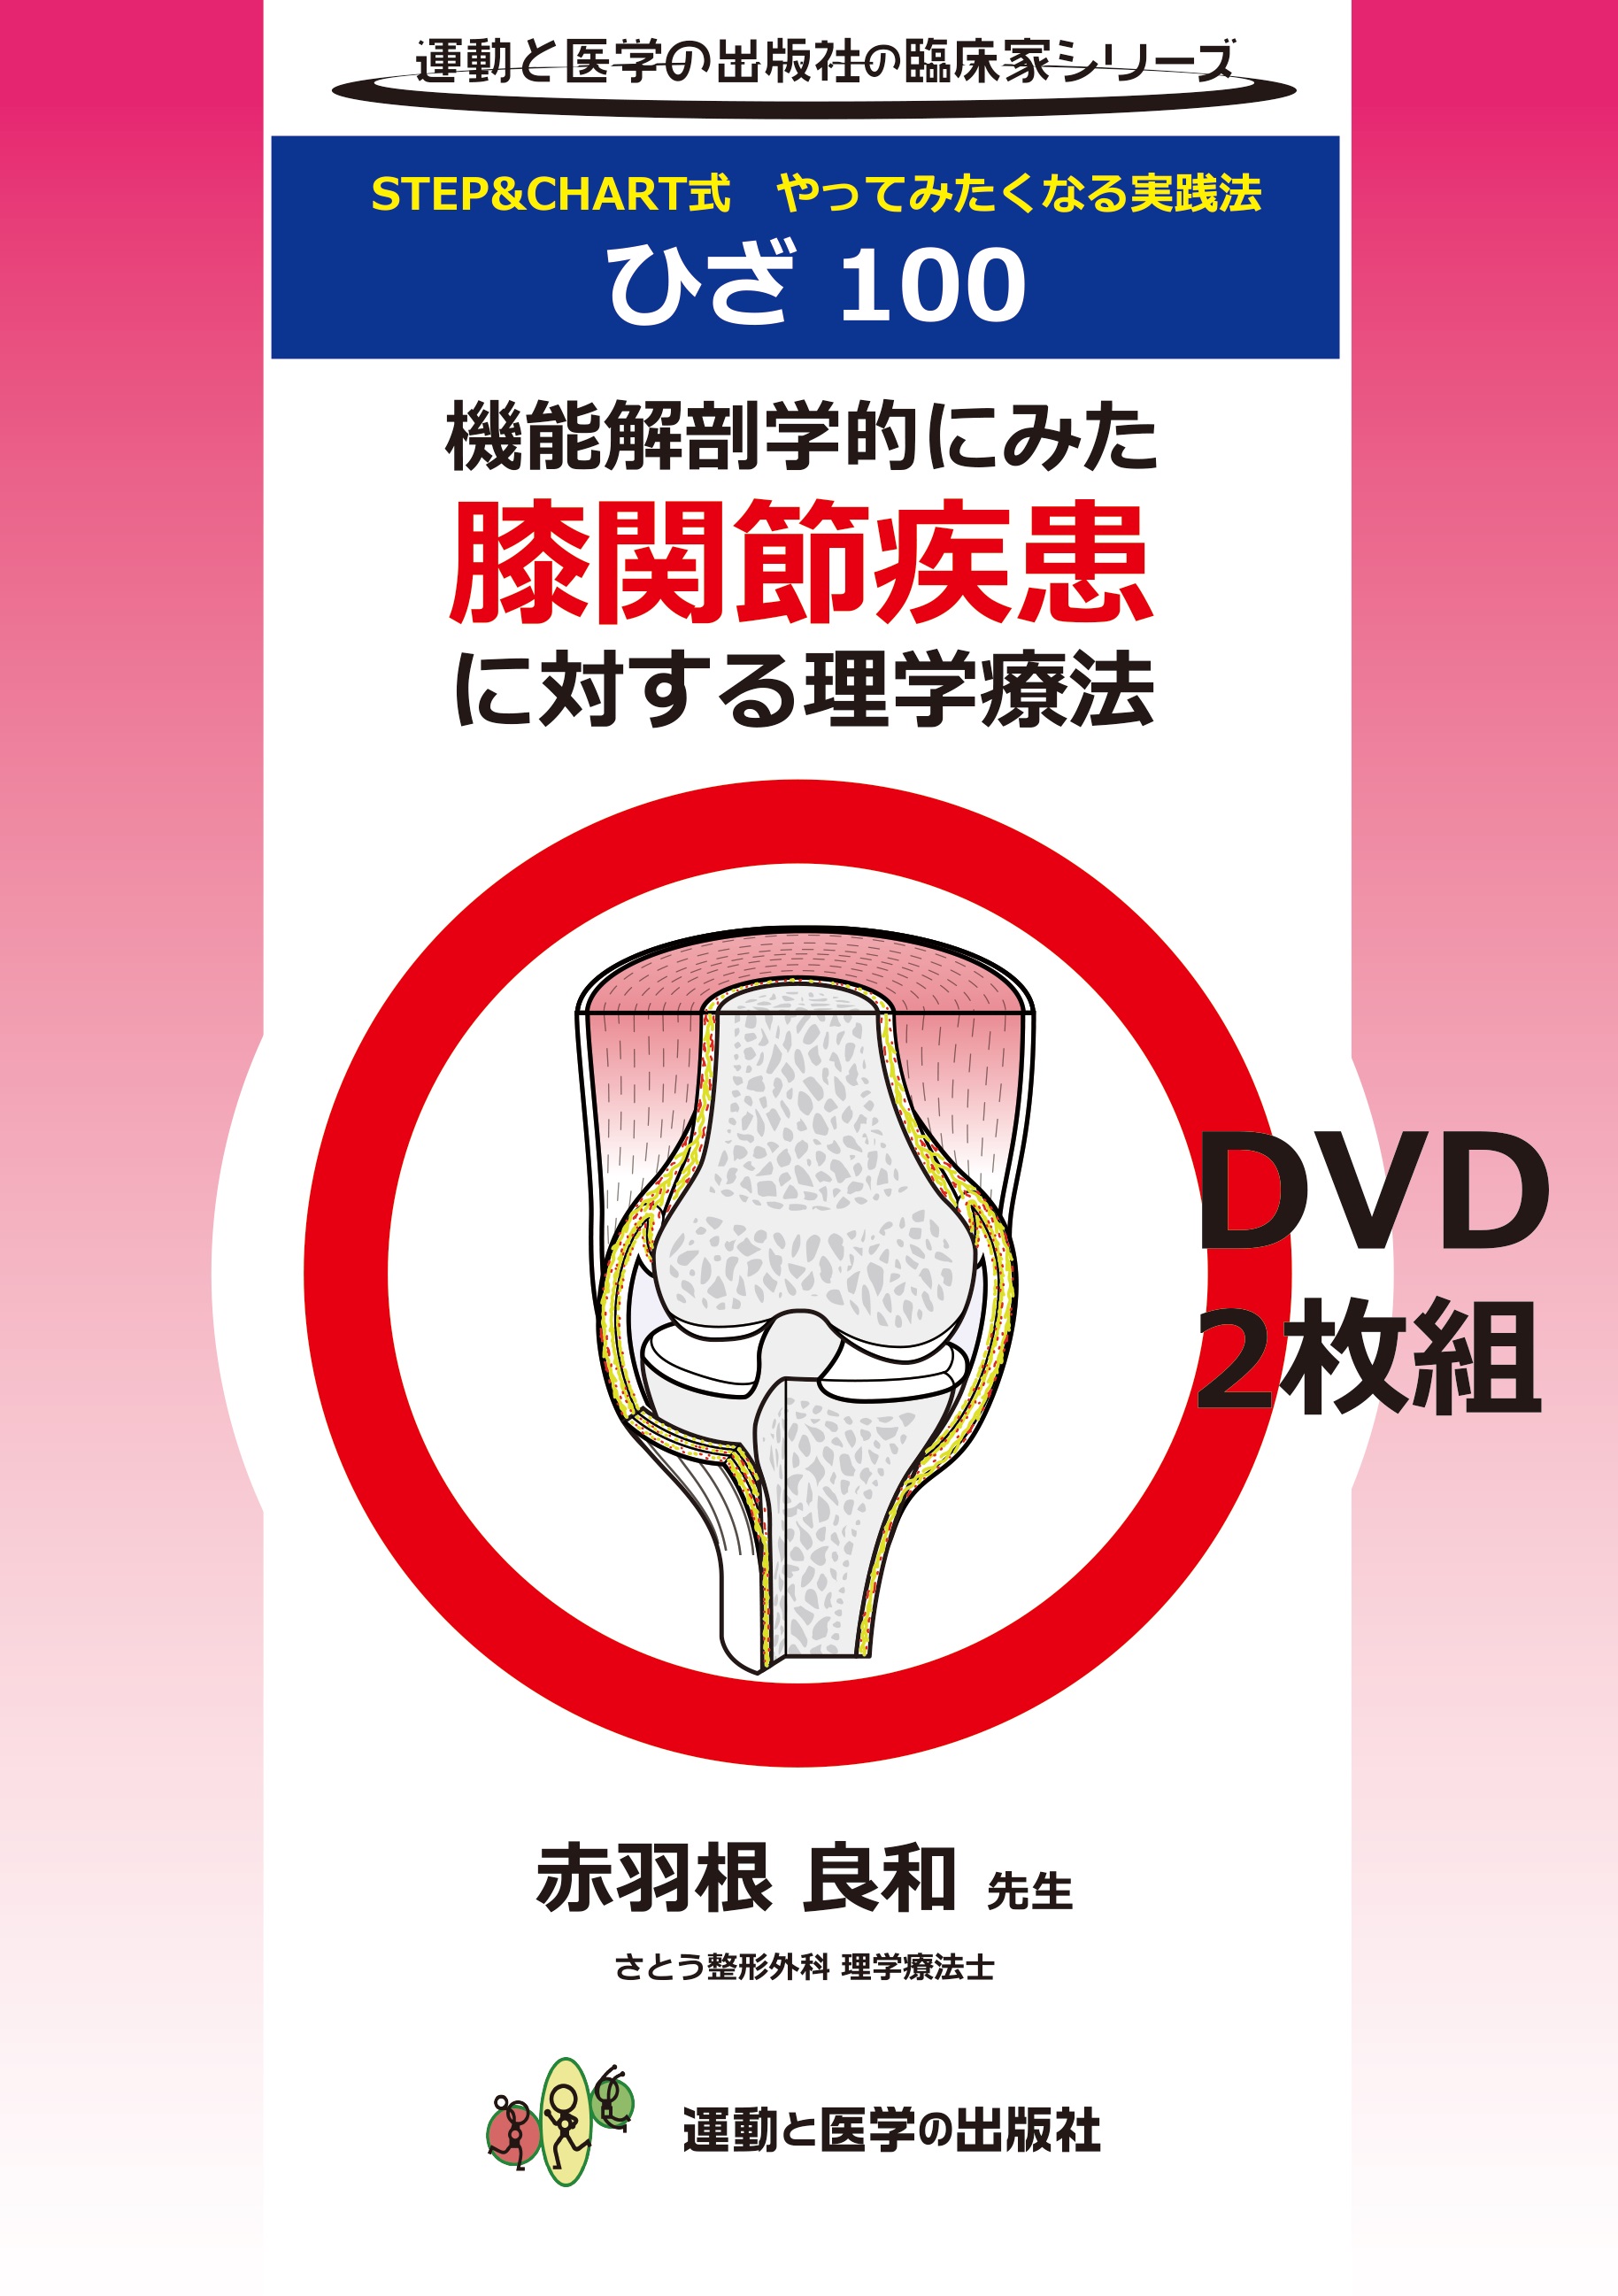 DVD全2枚組！】変形性股関節症に対する人工股関節置換術後の理学療法 